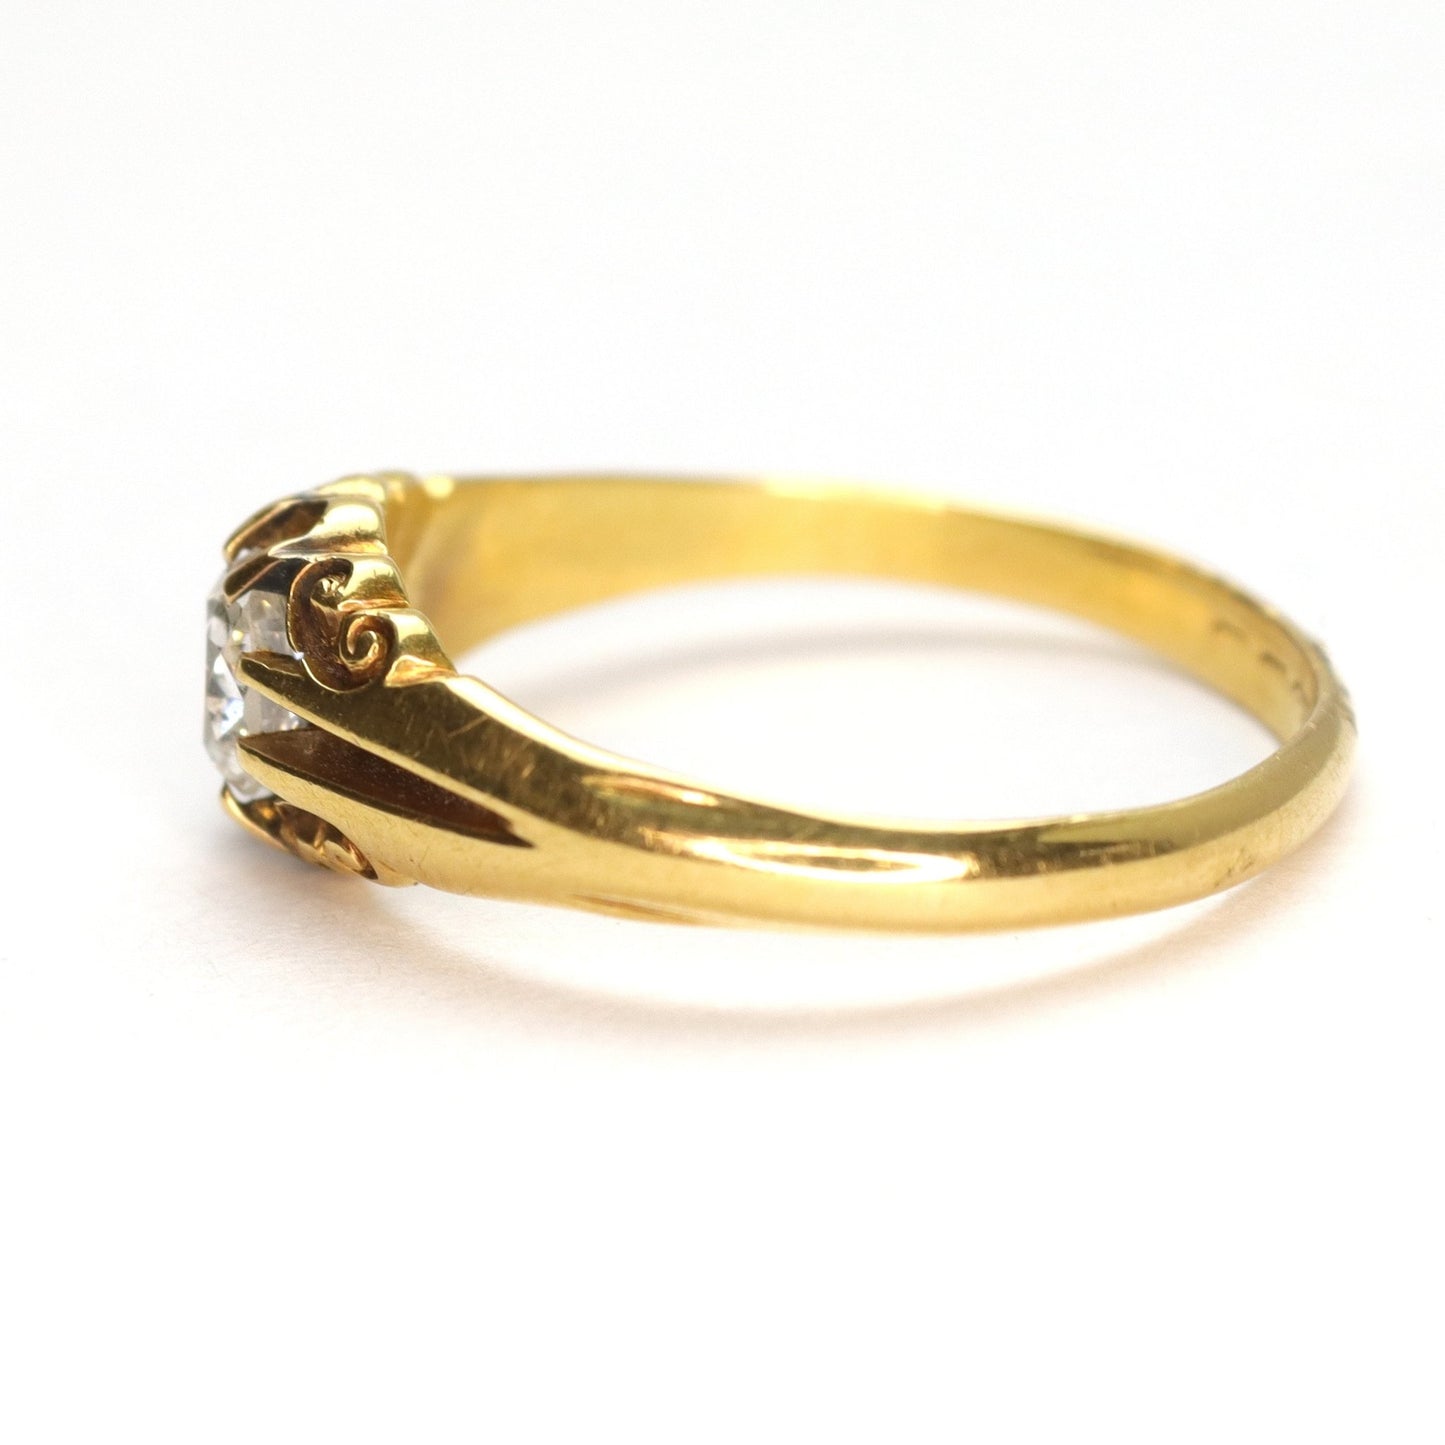 Vintage 18ct yellow Gold .50 Carat Old Mine Cut Diamond Ring - Friar House